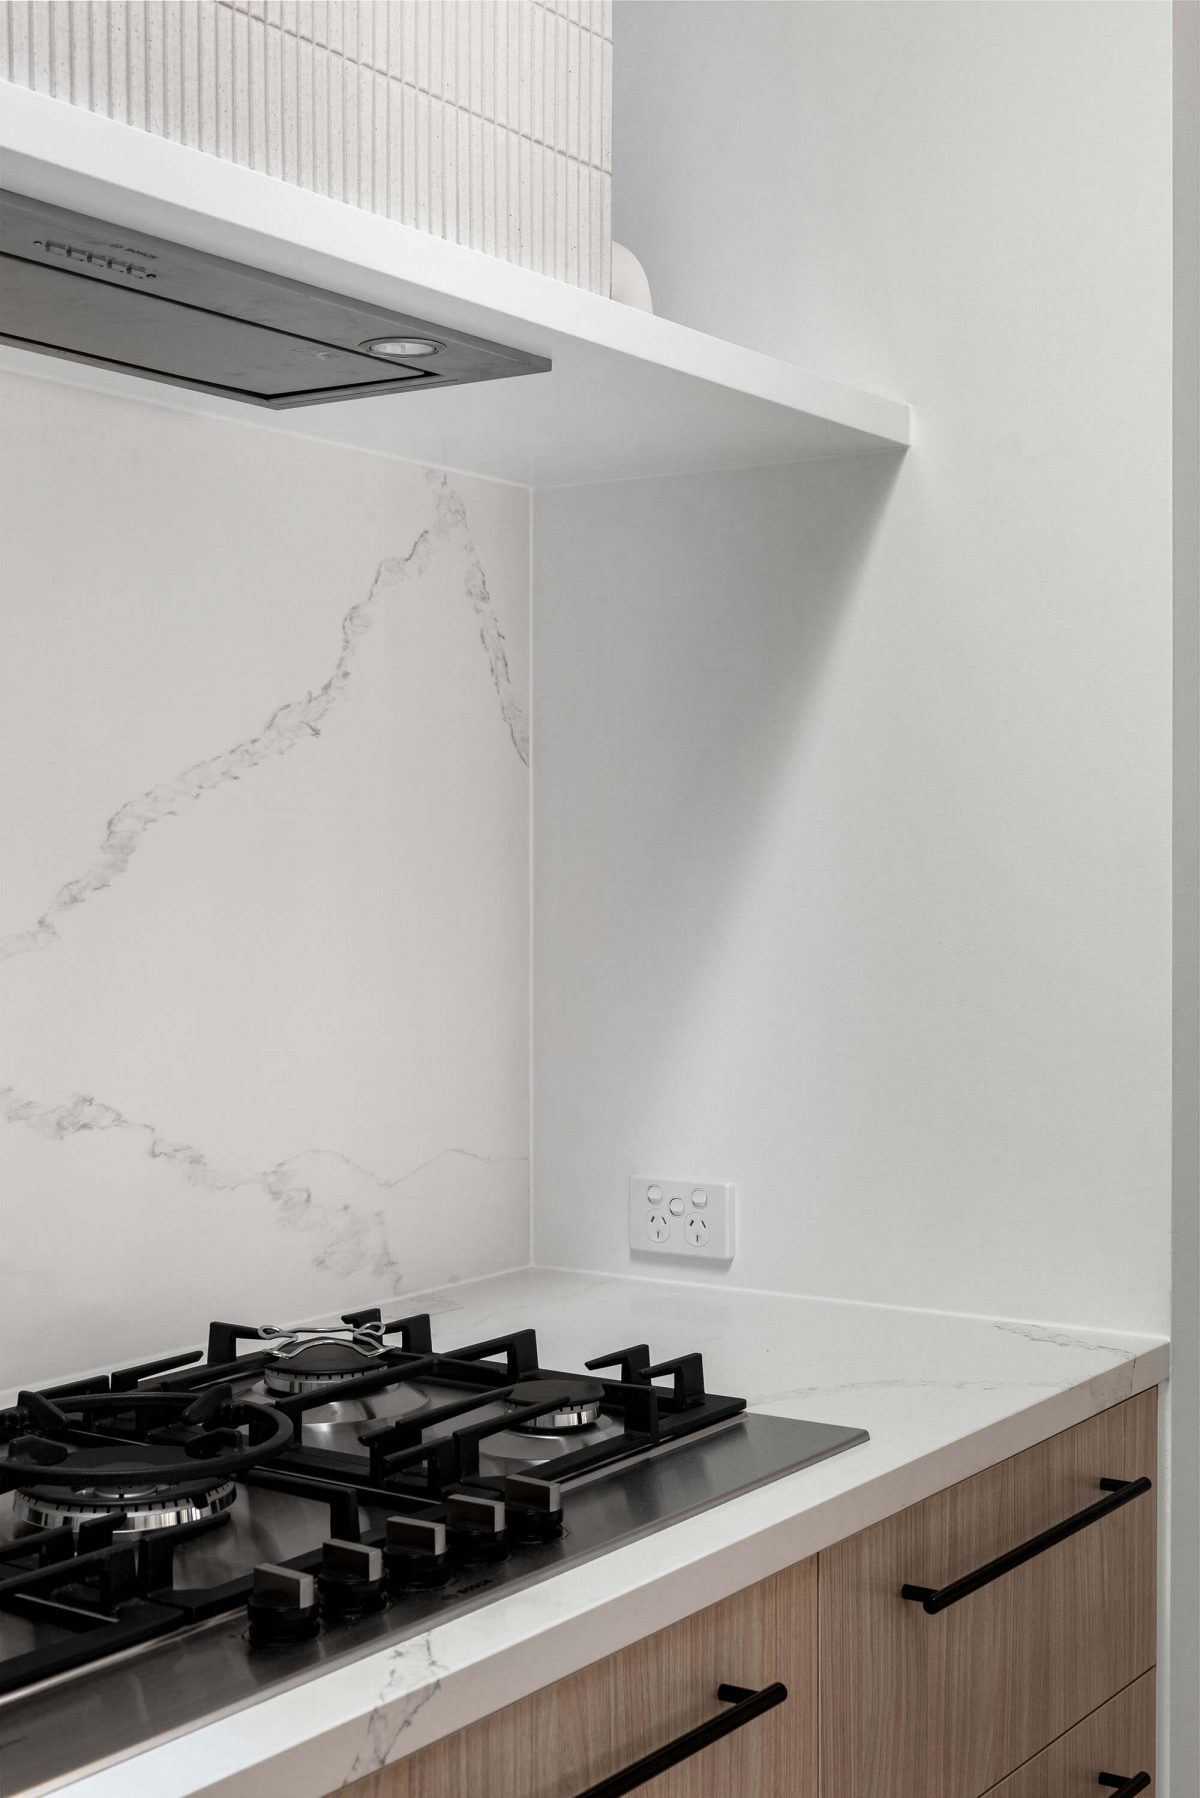 Kitchen Renovation Minimalist Design